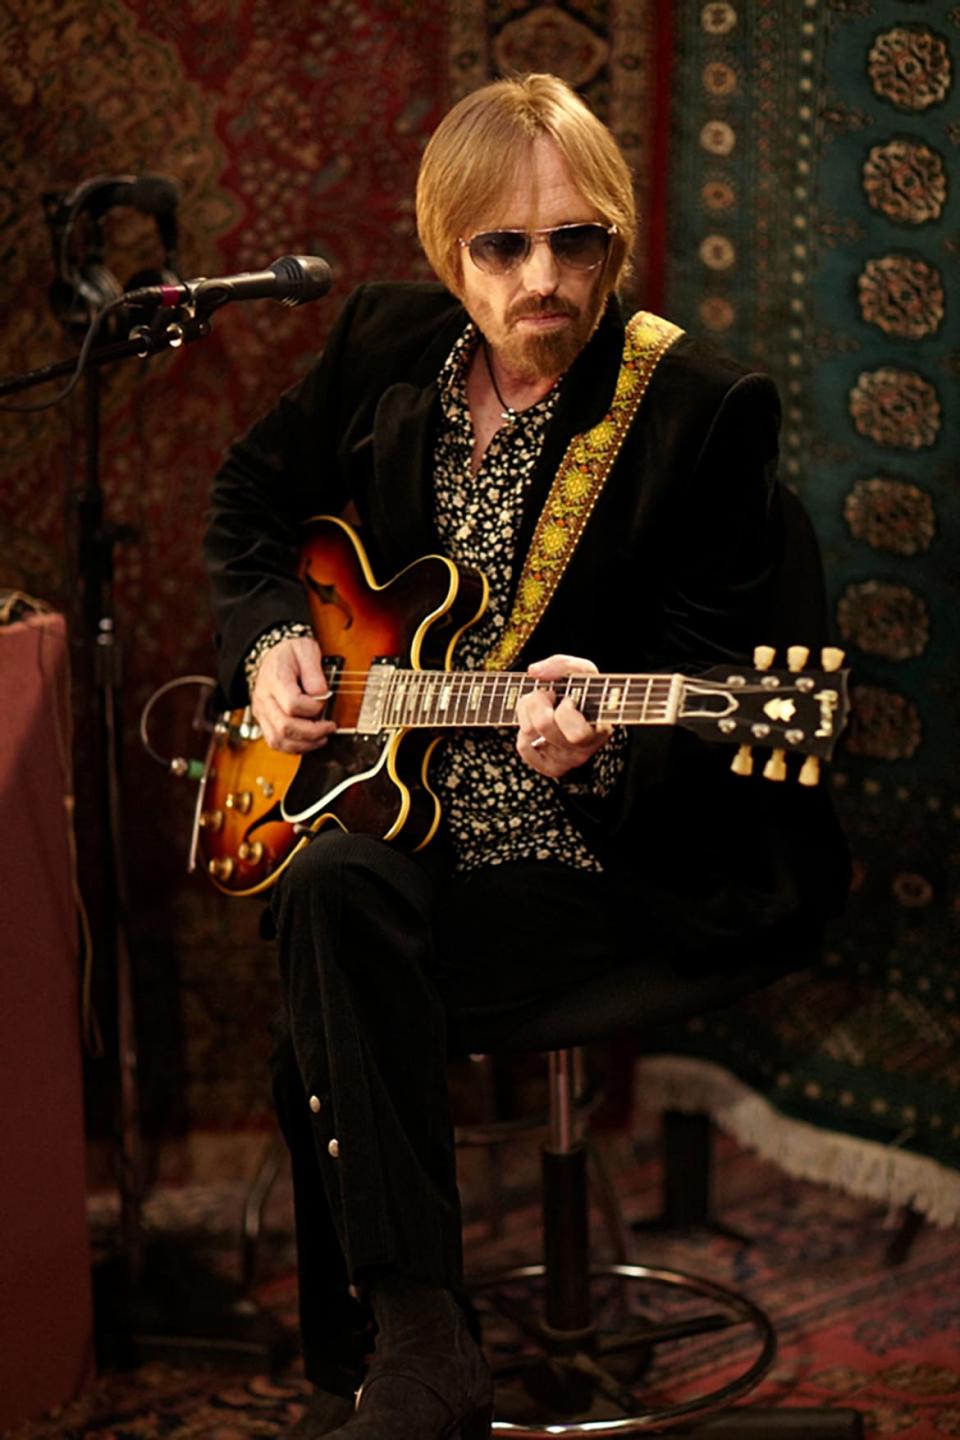 Musician Tom Petty